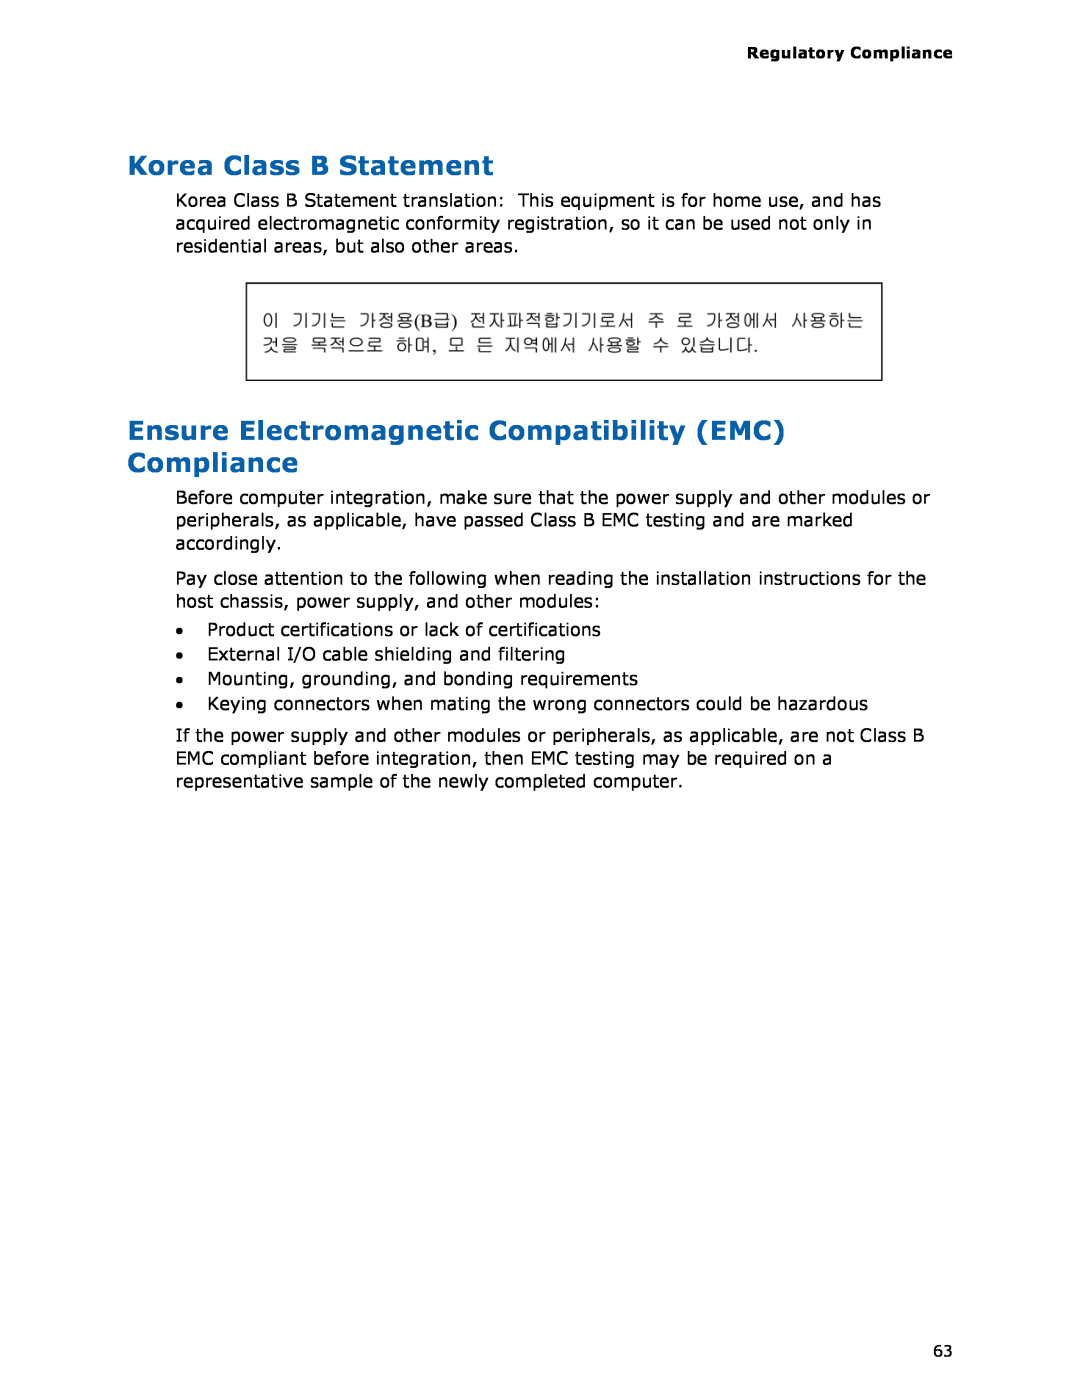 Intel BOXDH61AG manual Korea Class B Statement, Ensure Electromagnetic Compatibility EMC Compliance 